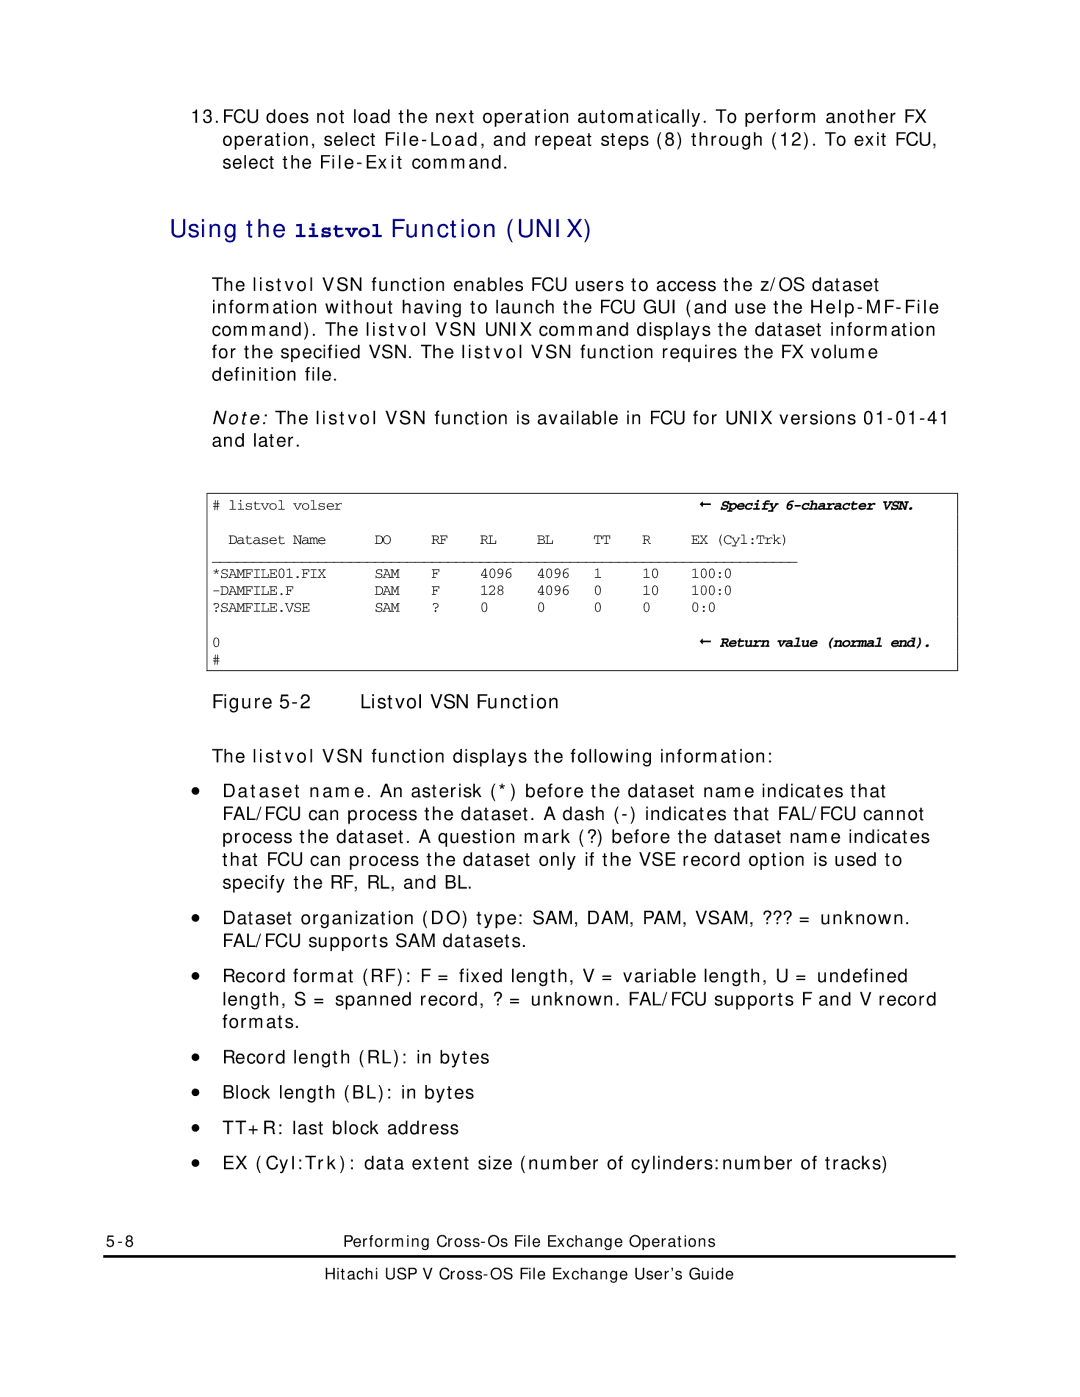 Hitachi MK-96RD647-01 manual Using the listvol Function Unix, Listvol VSN Function 